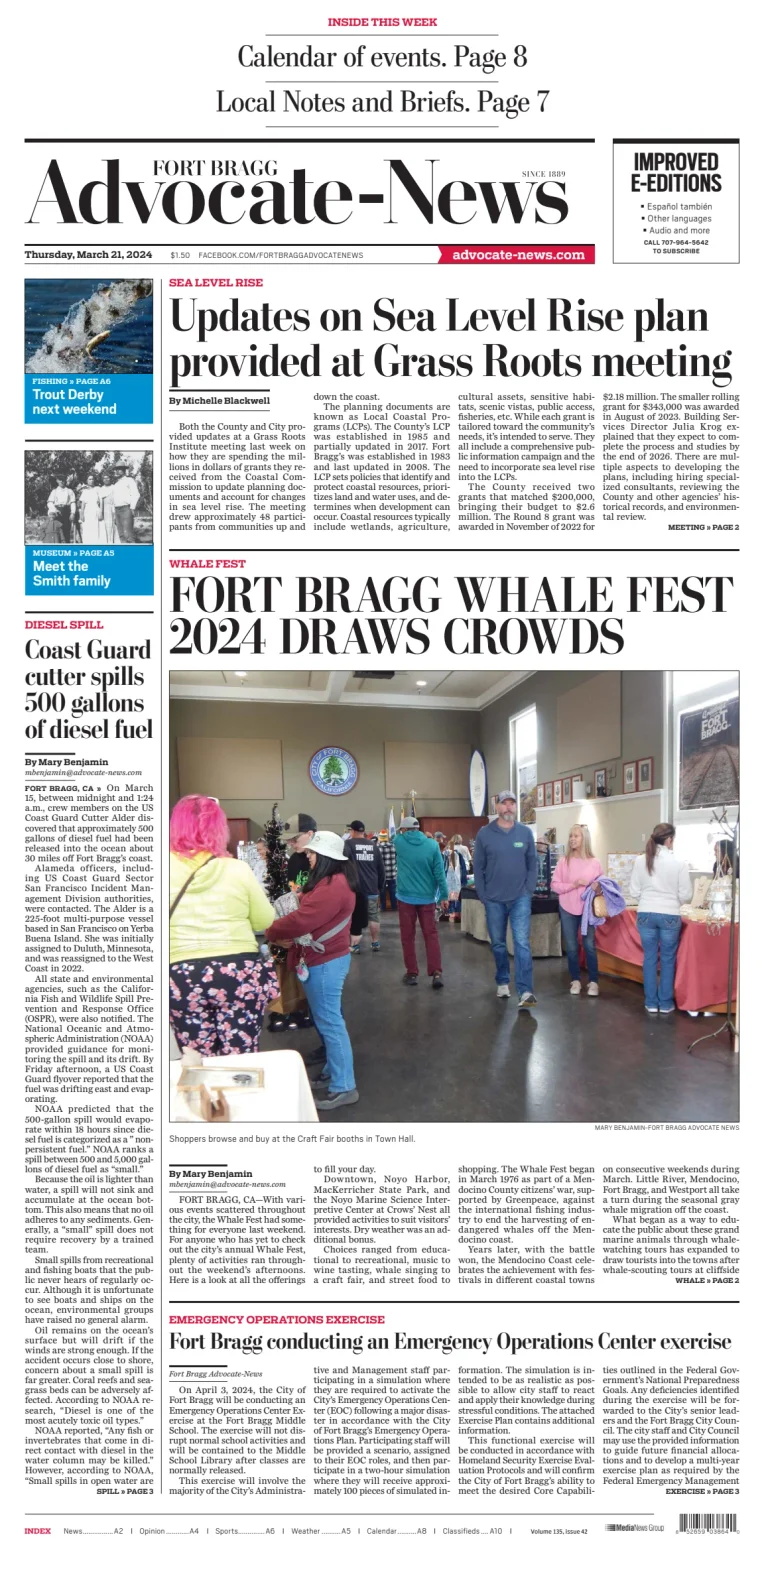 Fort Bragg Advocate-News